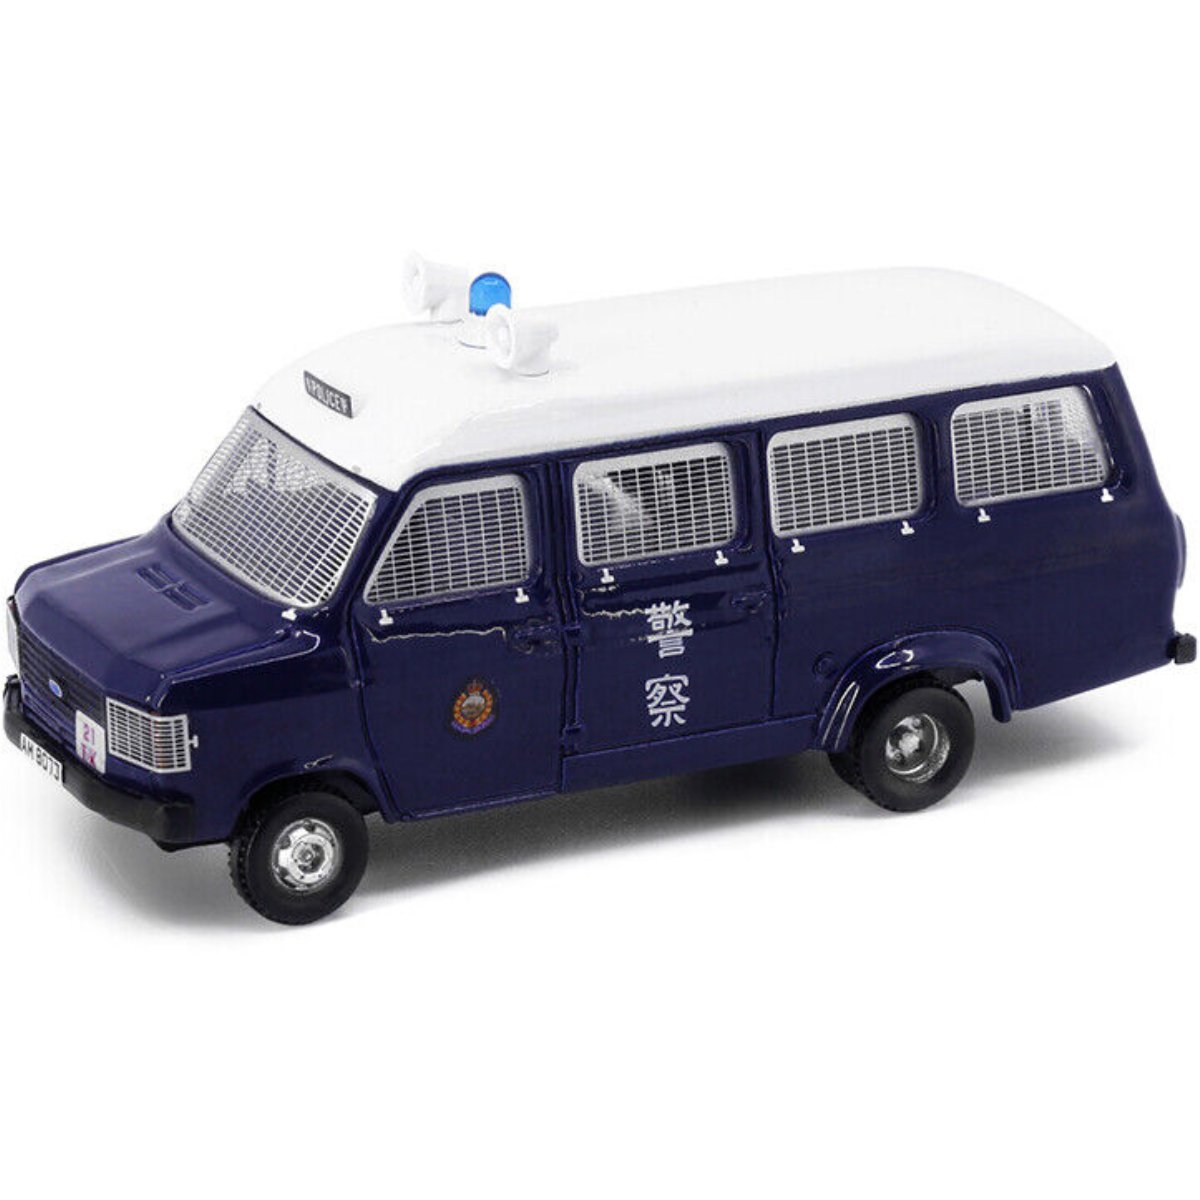 Tiny Models 1980's Police Van - Royal Hong Kong Police AM78073 (1:76 Scale) - Phillips Hobbies